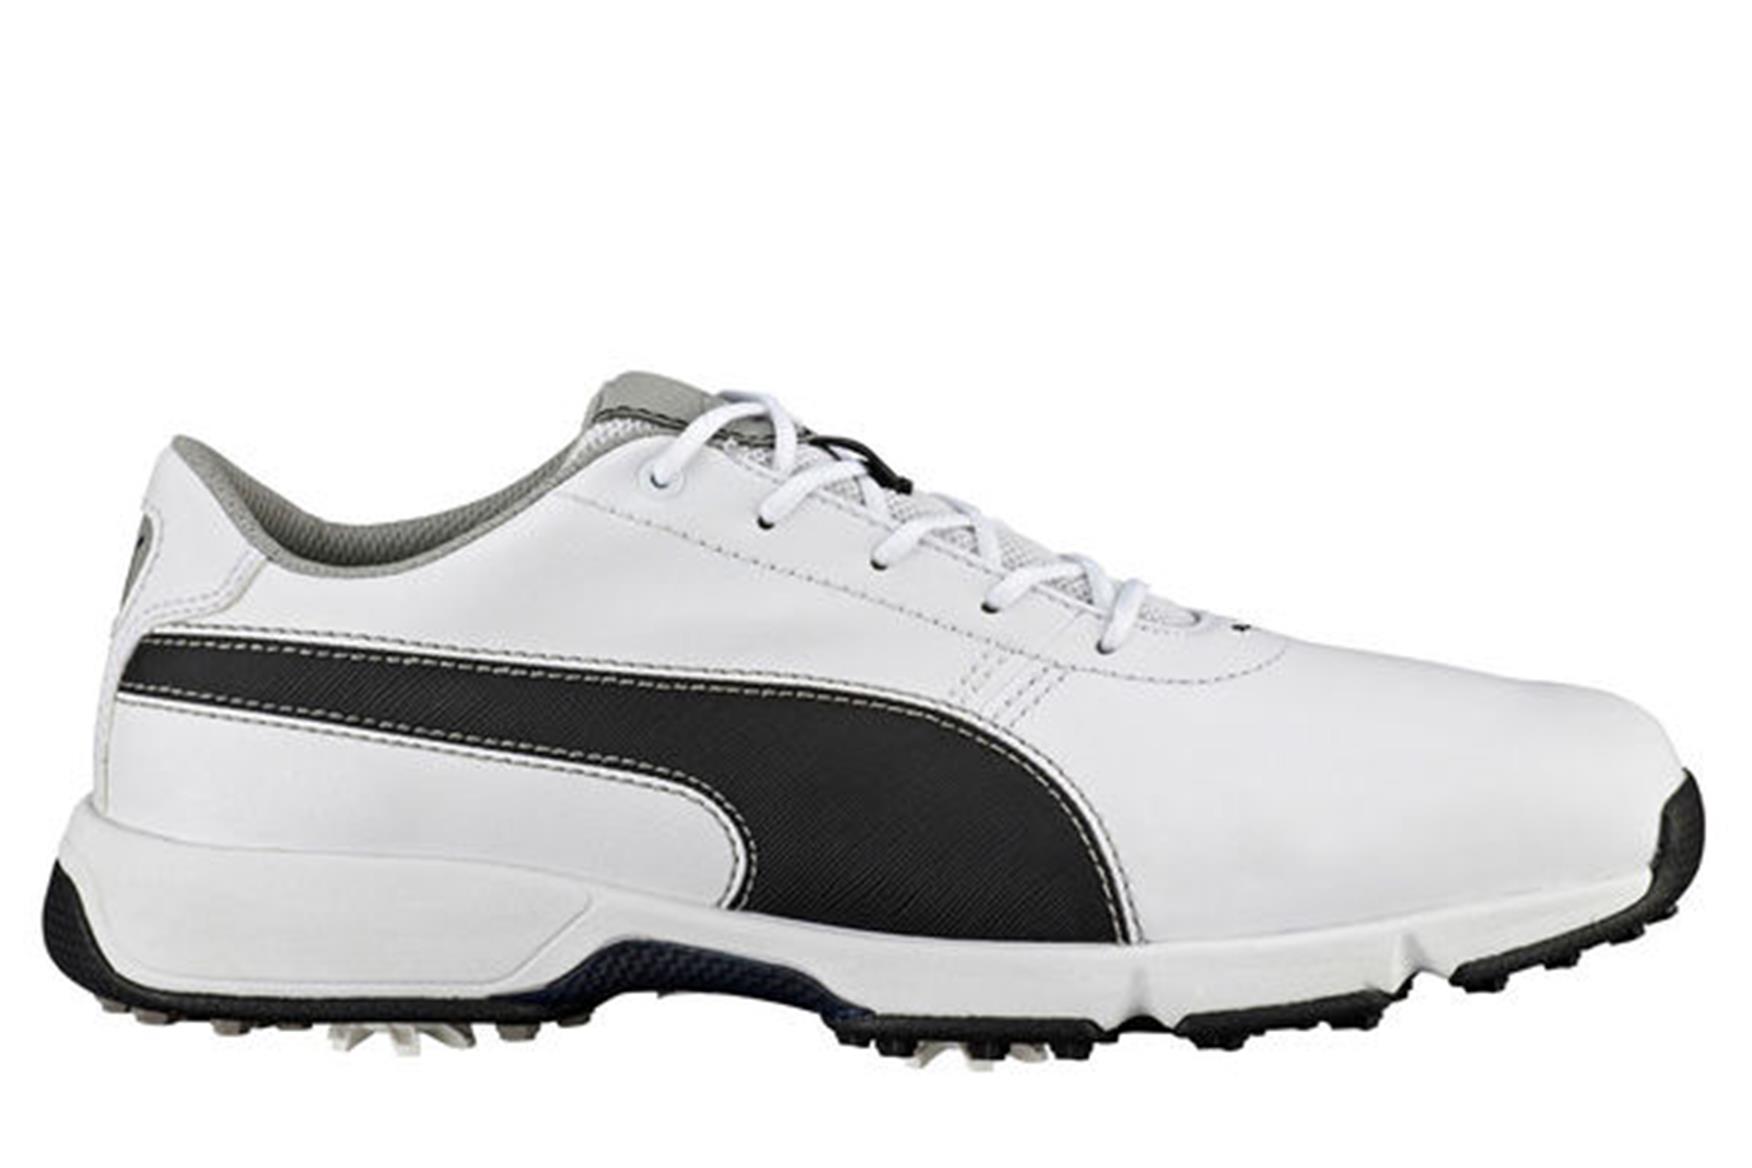 Puma Ignite Drive Golf Shoes Review 